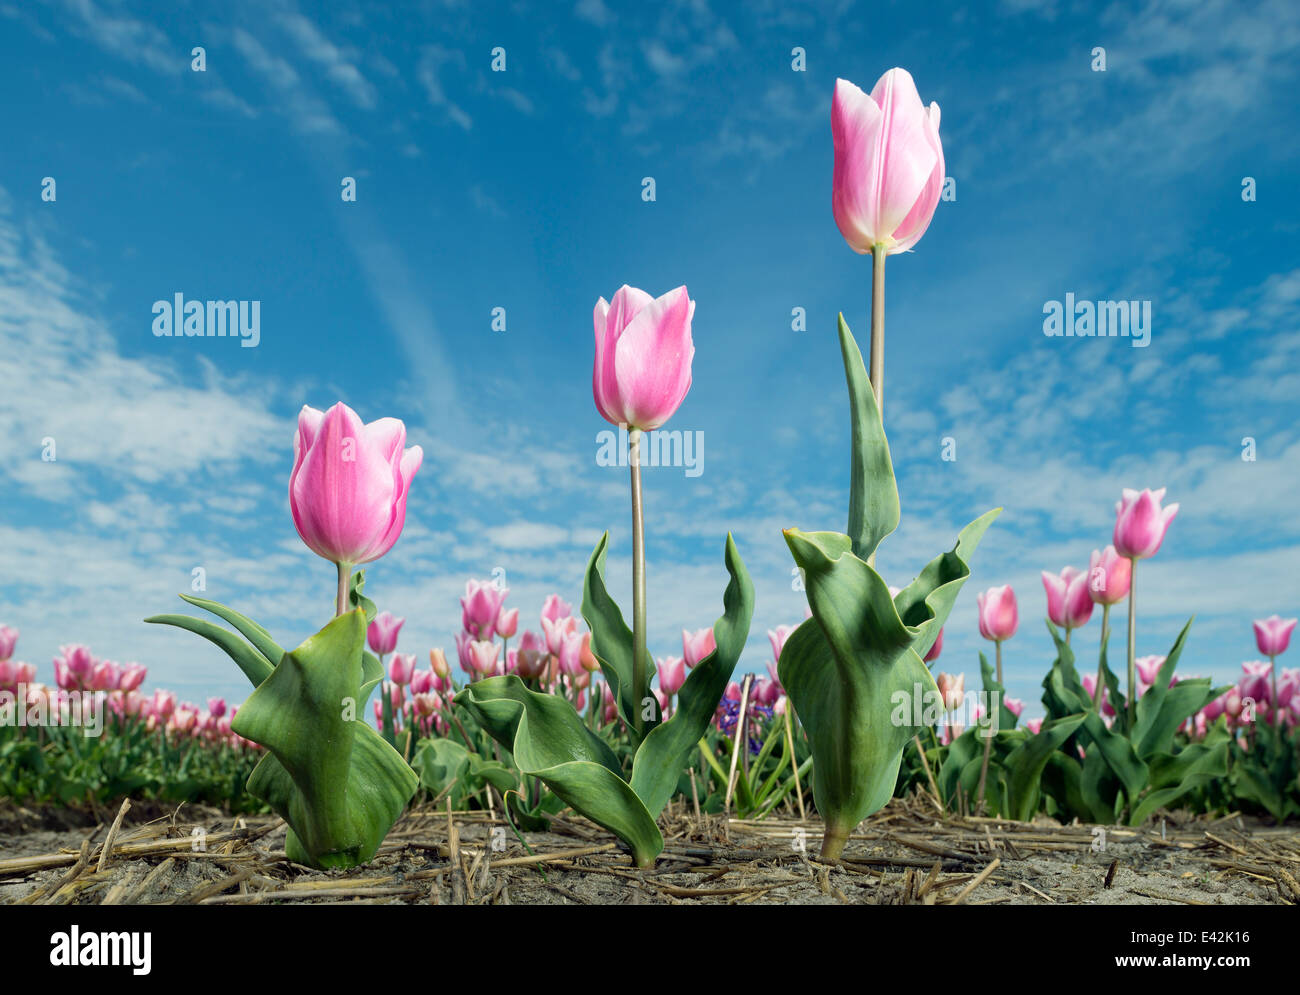 Rosa Tulpen wachsen im Feld, Niederlande Stockfoto